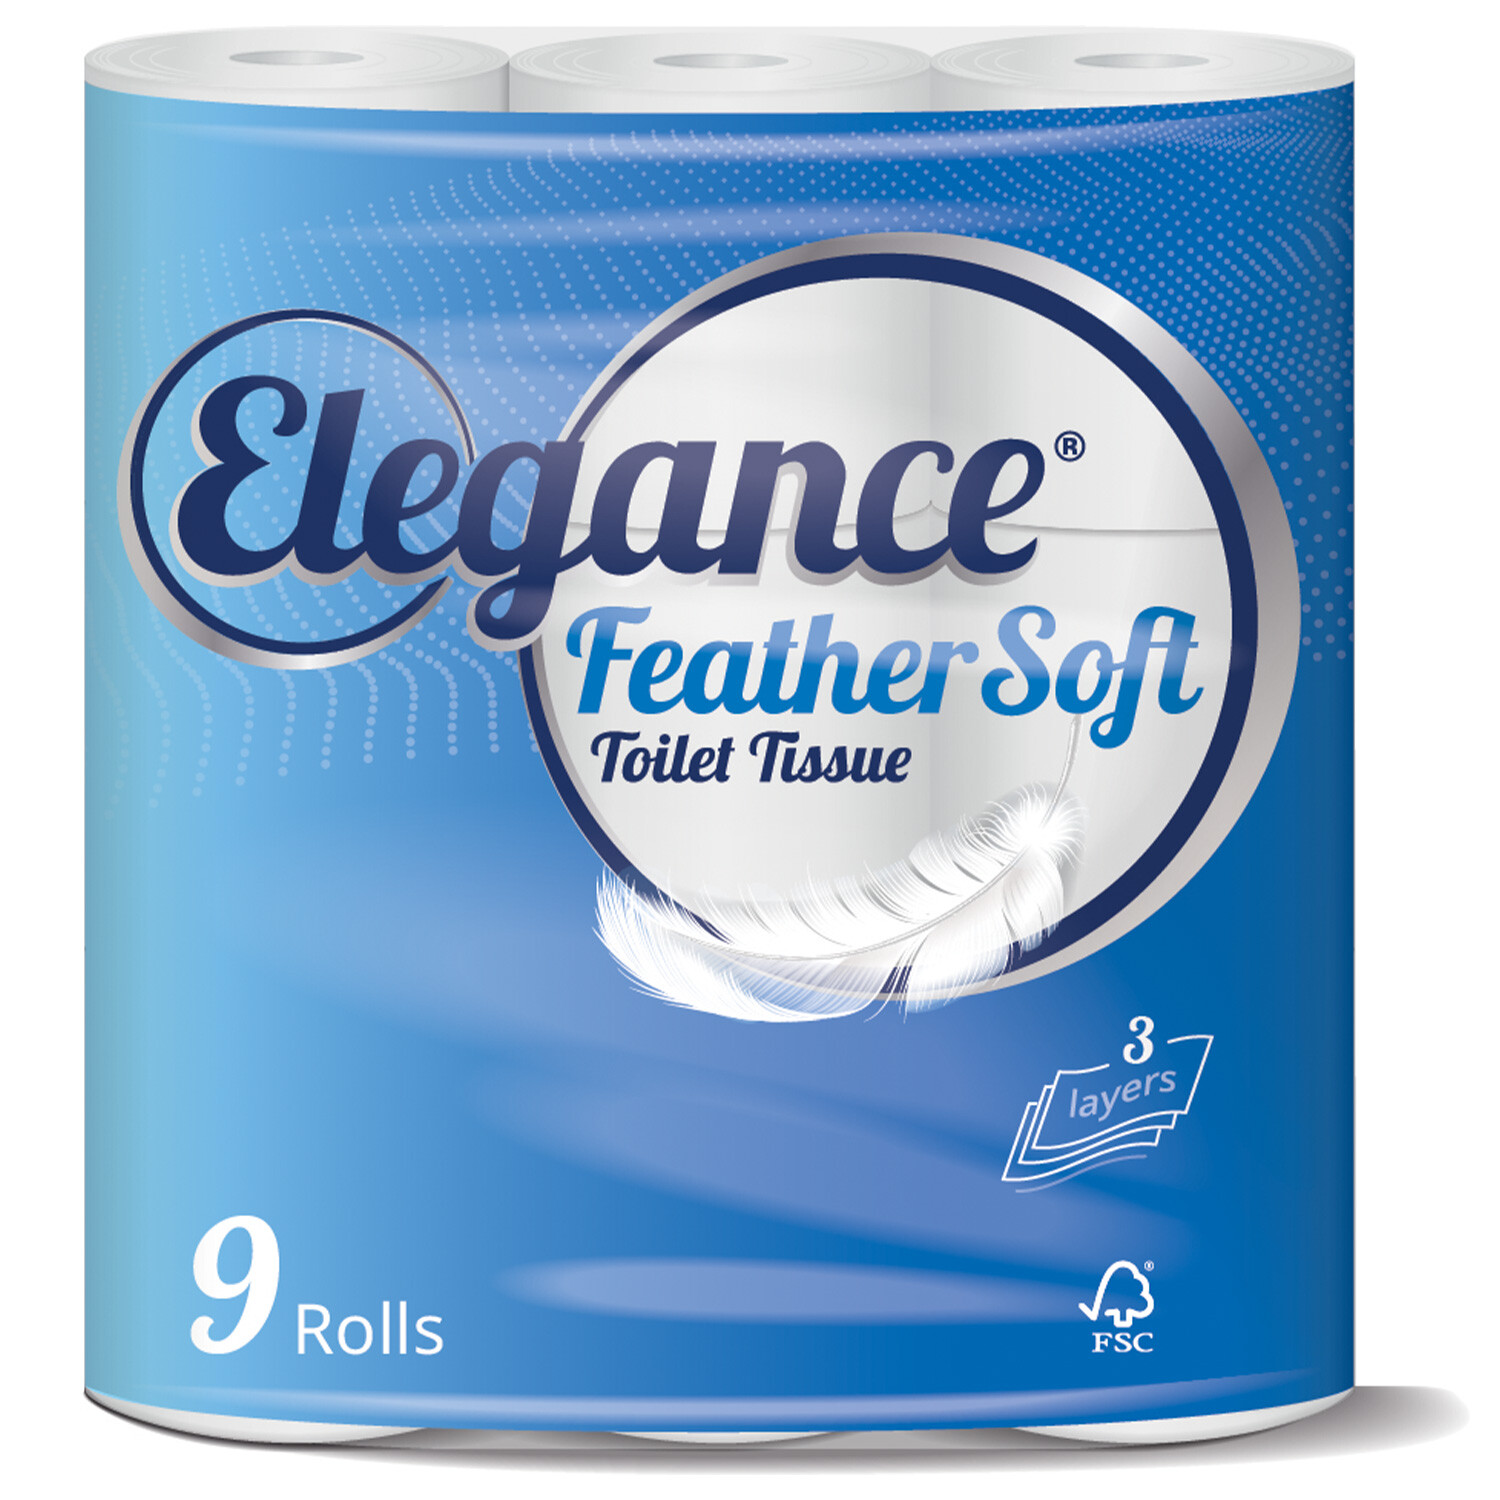 Elegance Feather Soft Toilet Tissue Image